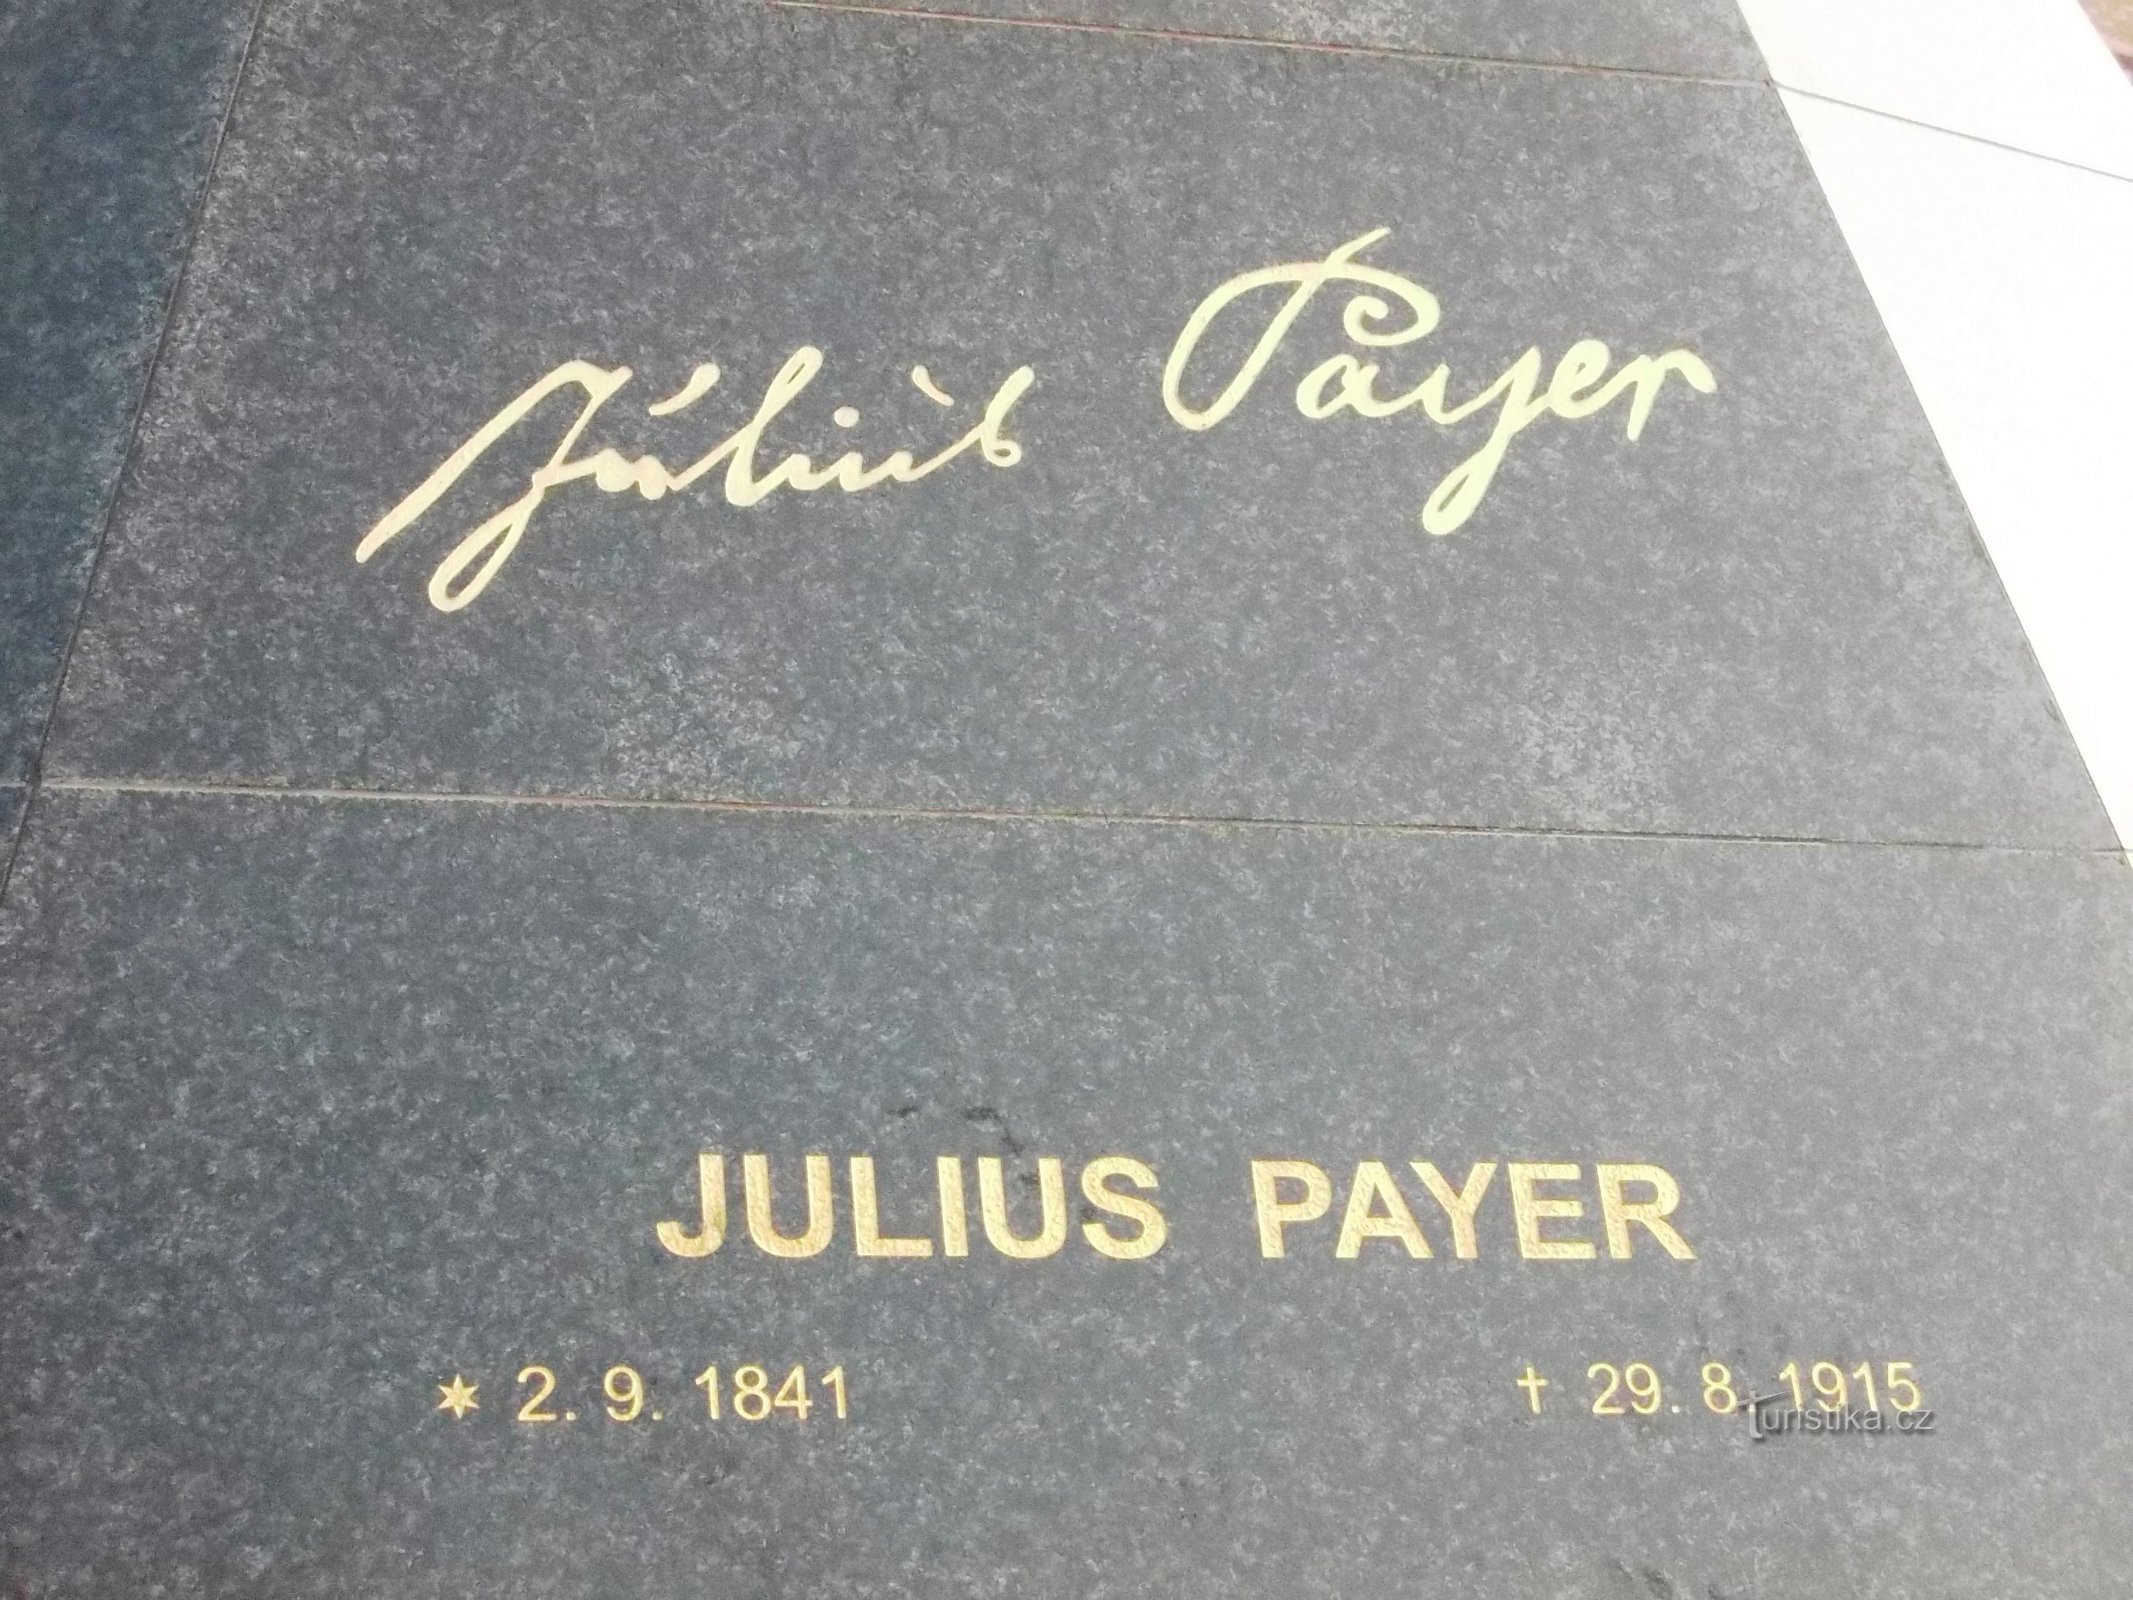 Julius Payer visse negli anni 1841 - 1915